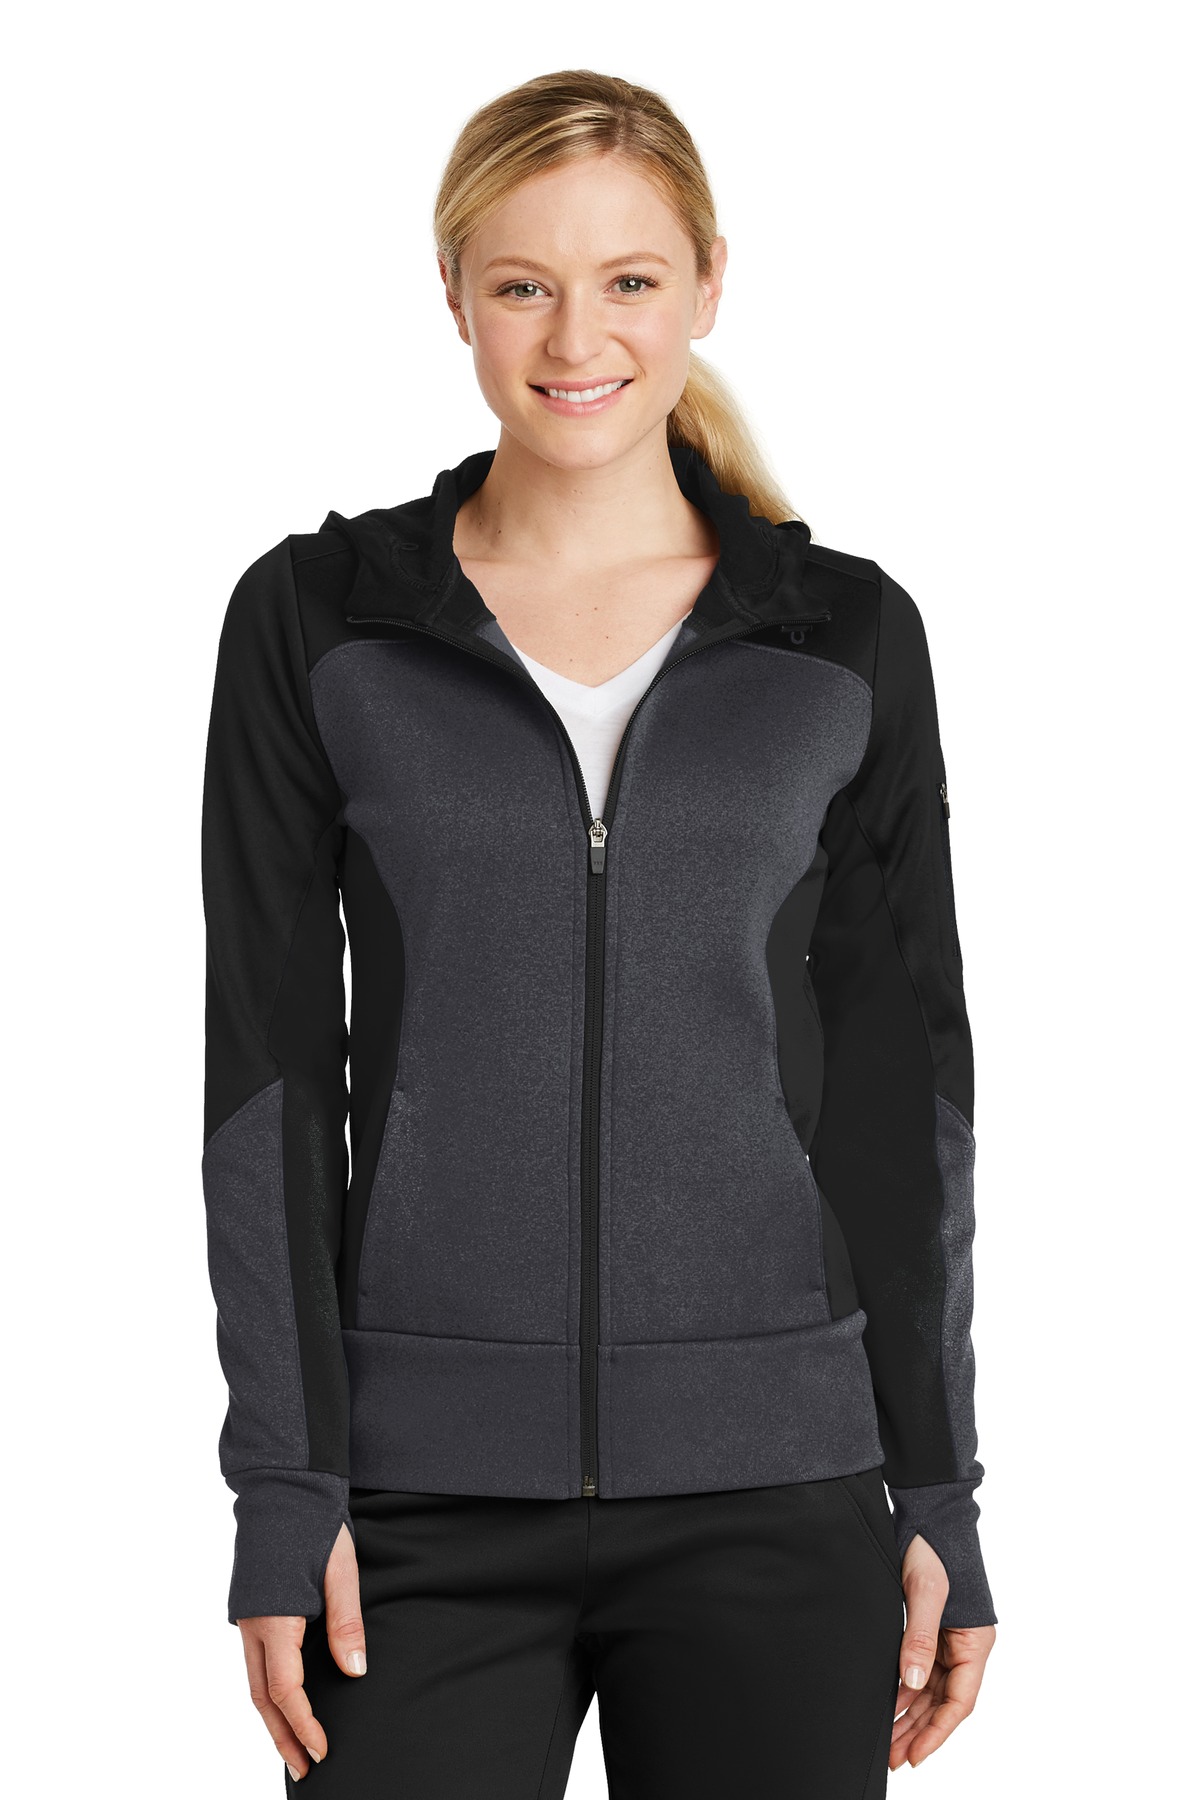 Sport-Tek Corporate Hospitality Ladies Sweatshirts & Fleece ® Ladies Tech Fleece Colorblock Full-Zip Hooded Jacket.-Sport-Tek